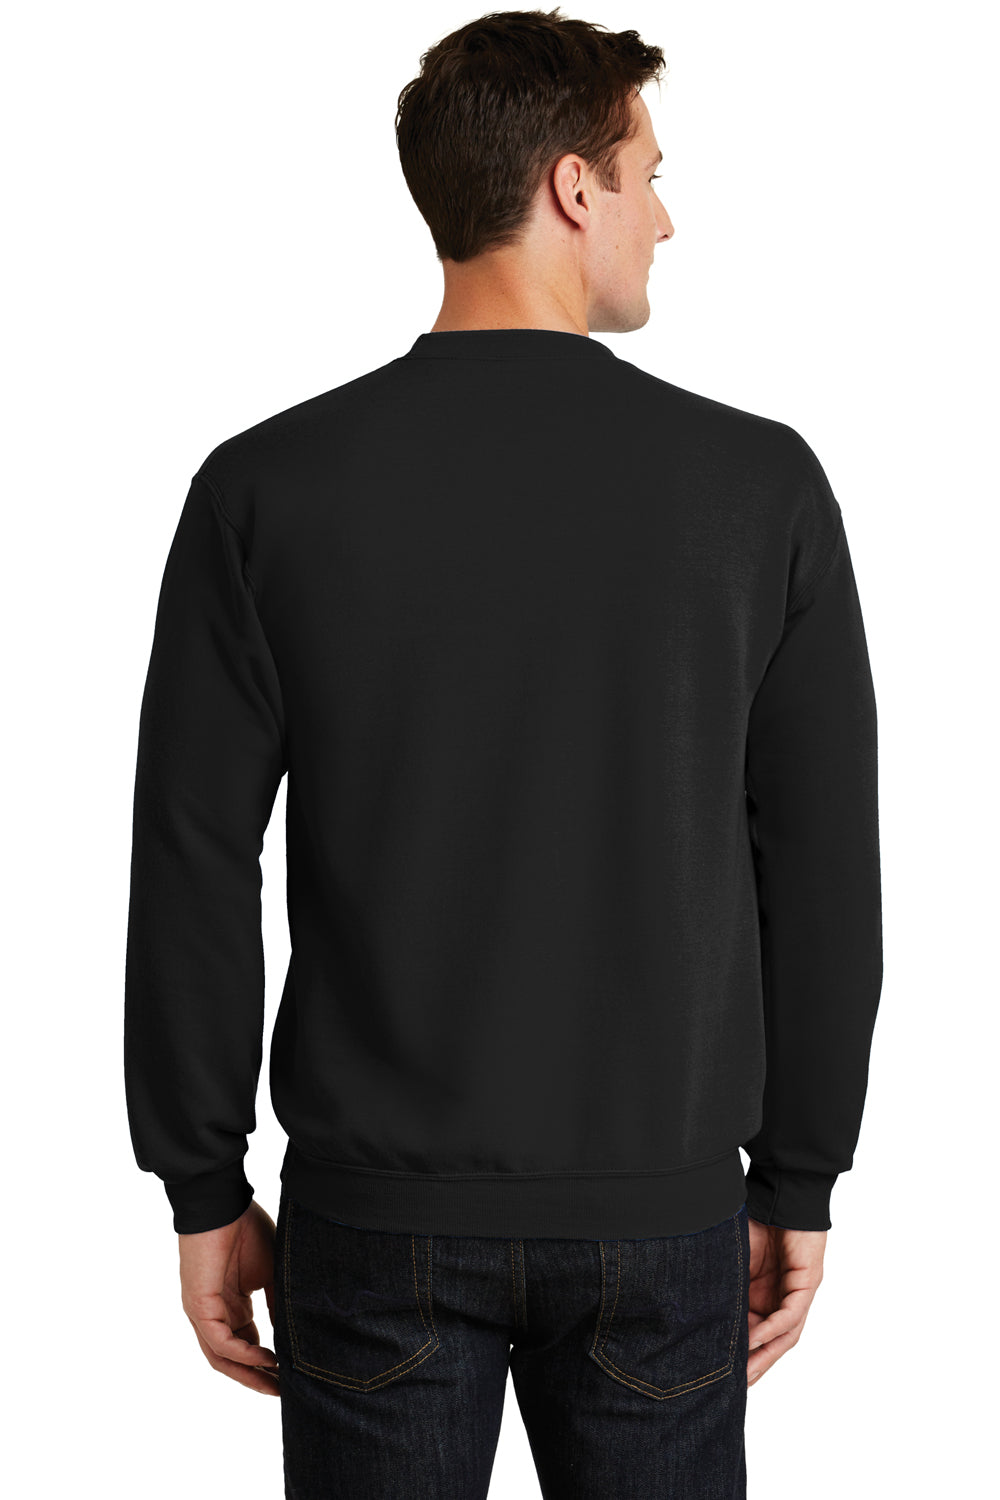 Port & Company PC78 Mens Core Fleece Crewneck Sweatshirt Black Back